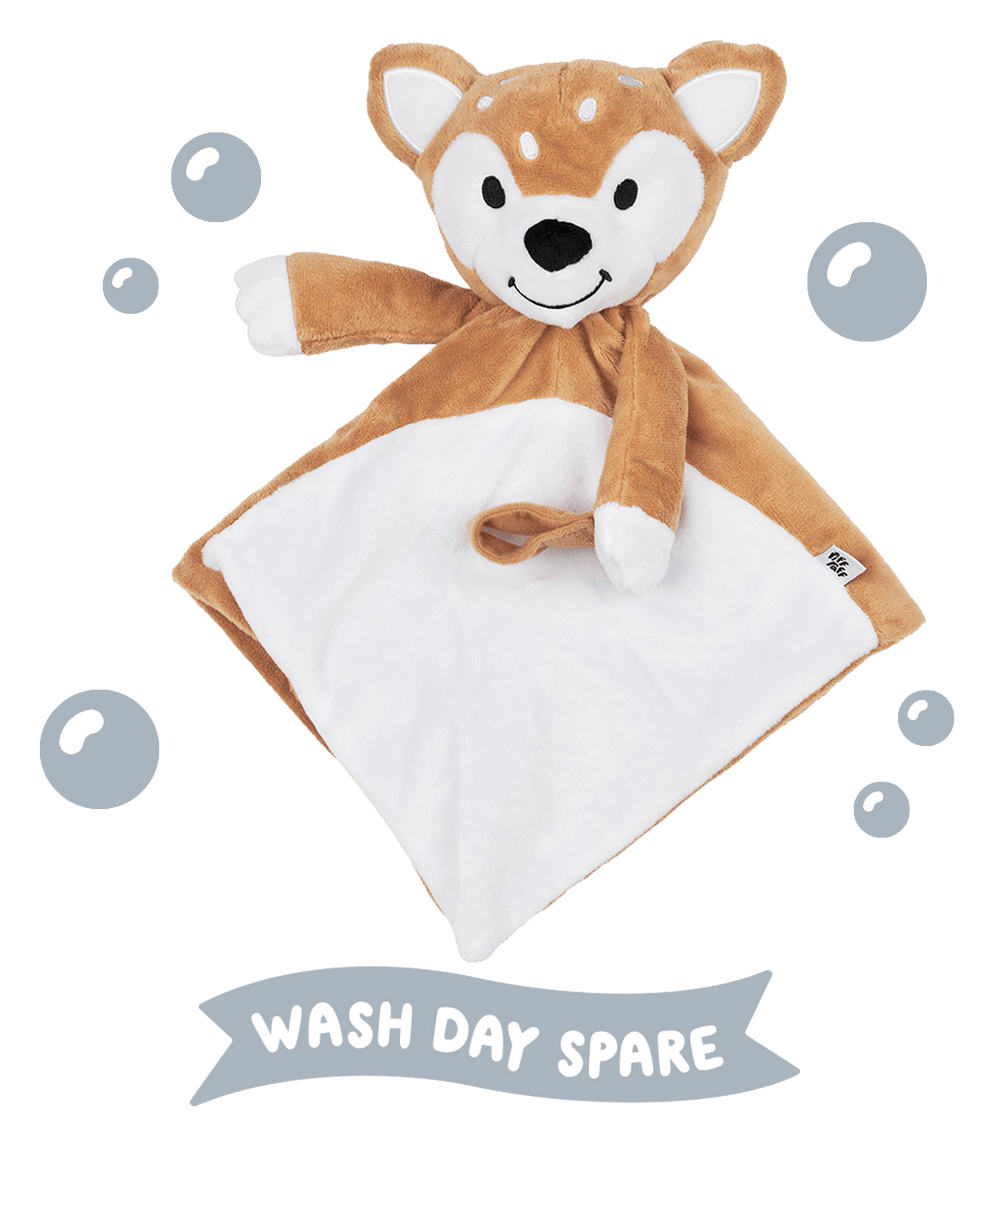 Wash Day Spare Plush - Raffy The Fawn (no soundbox included) Riff Raff & Co Sleep Toys 